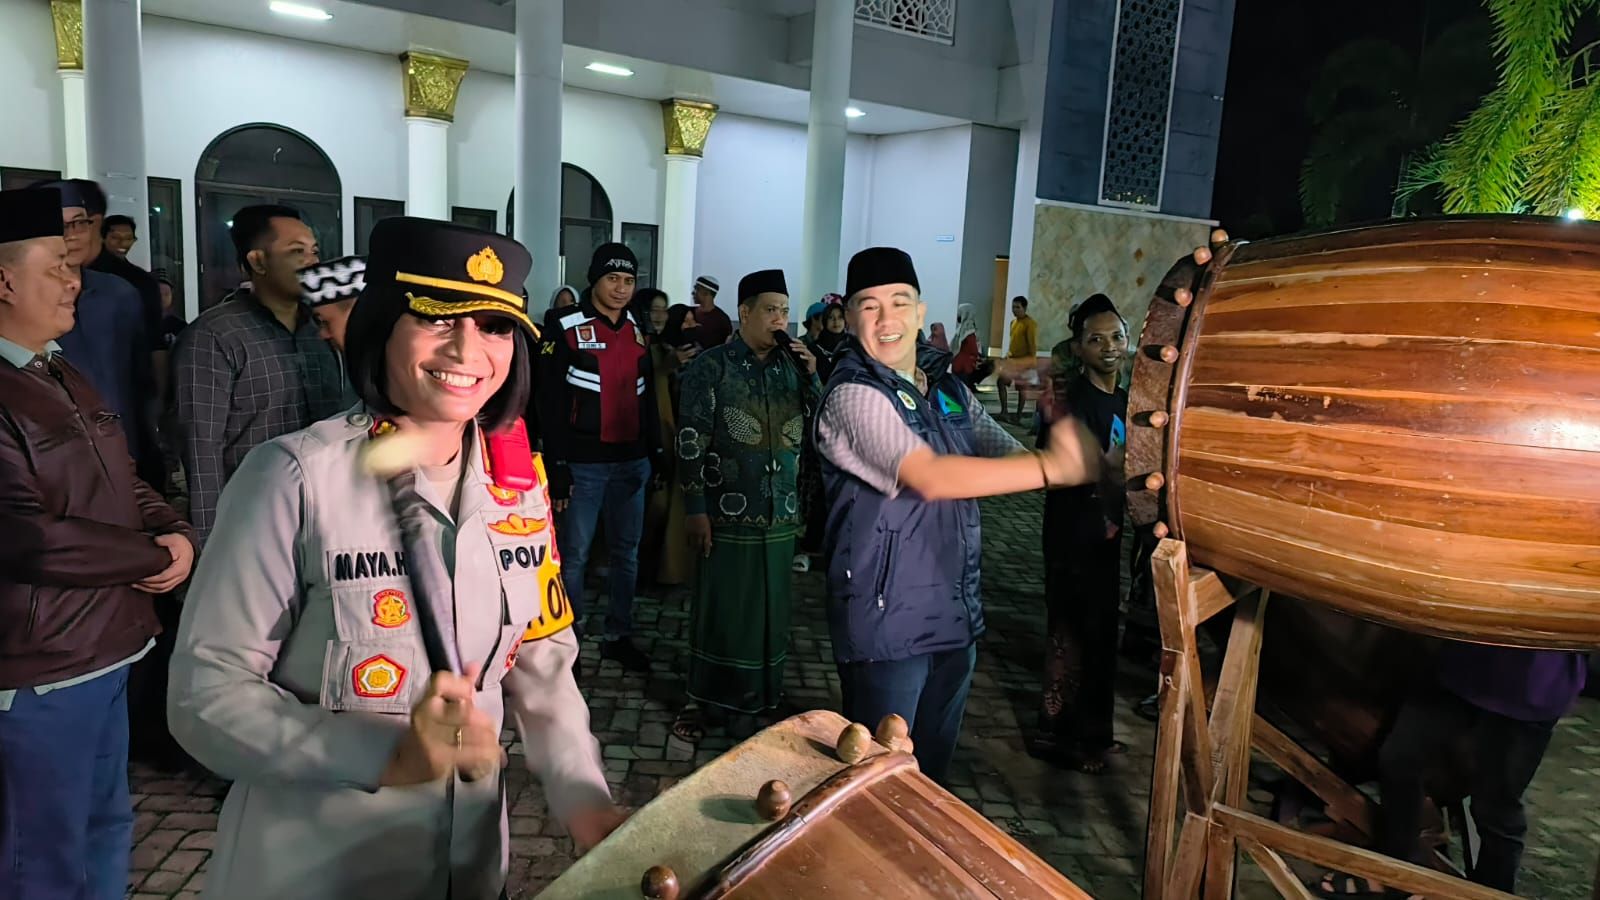 Kapolres Pesawaran Lampung AKBP Maya dan Bupati Dendi Gelar Takbiran Bersama di Islamic Center